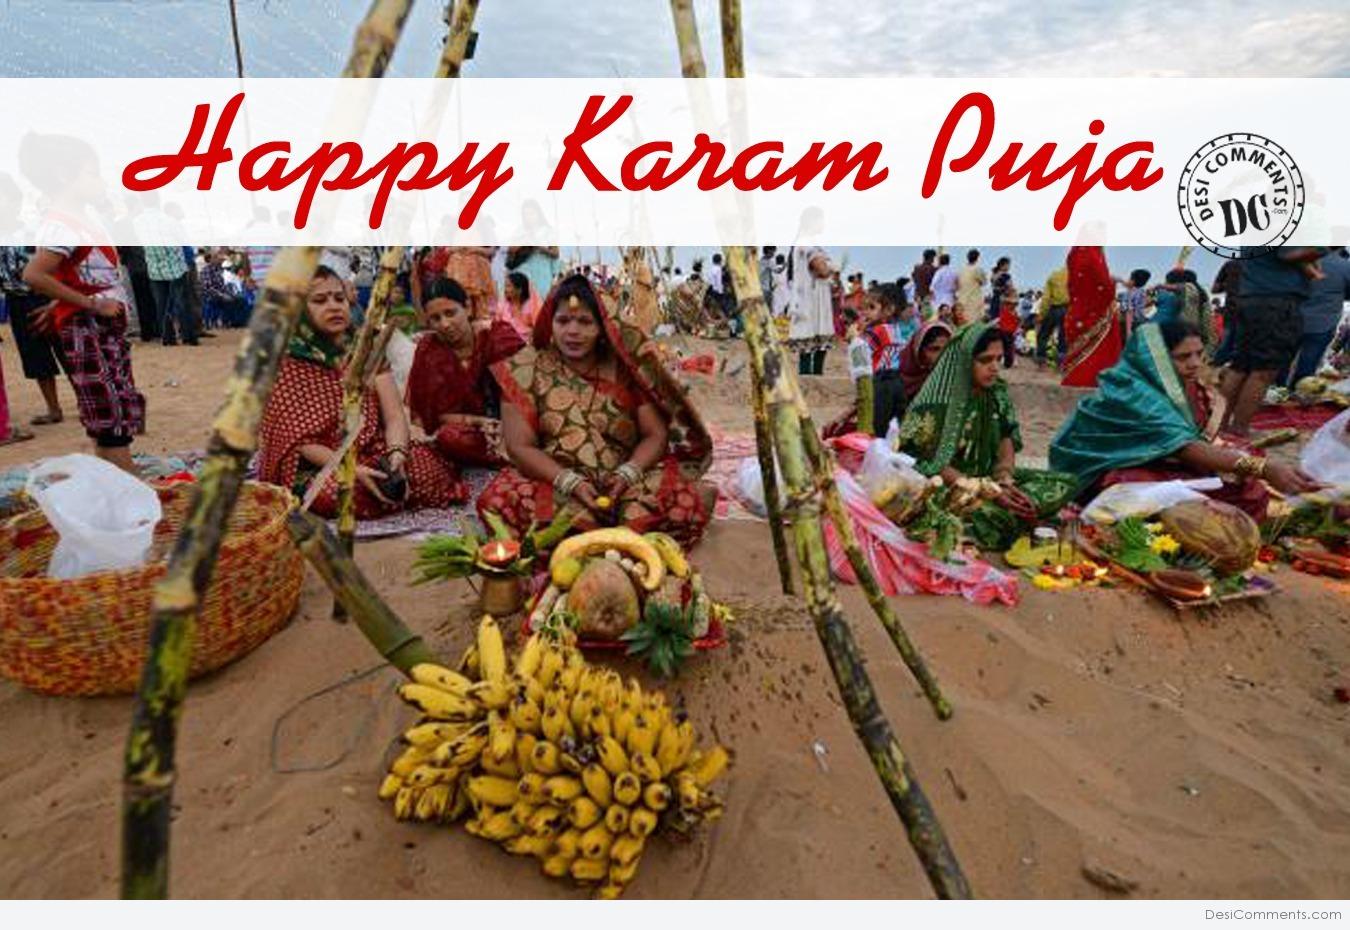 Deepak Kumar Nayak on Twitter I wishing you all happy karma pujaI is  natural festival of jharkhand httpstcoDqgAHVOhwr  Twitter